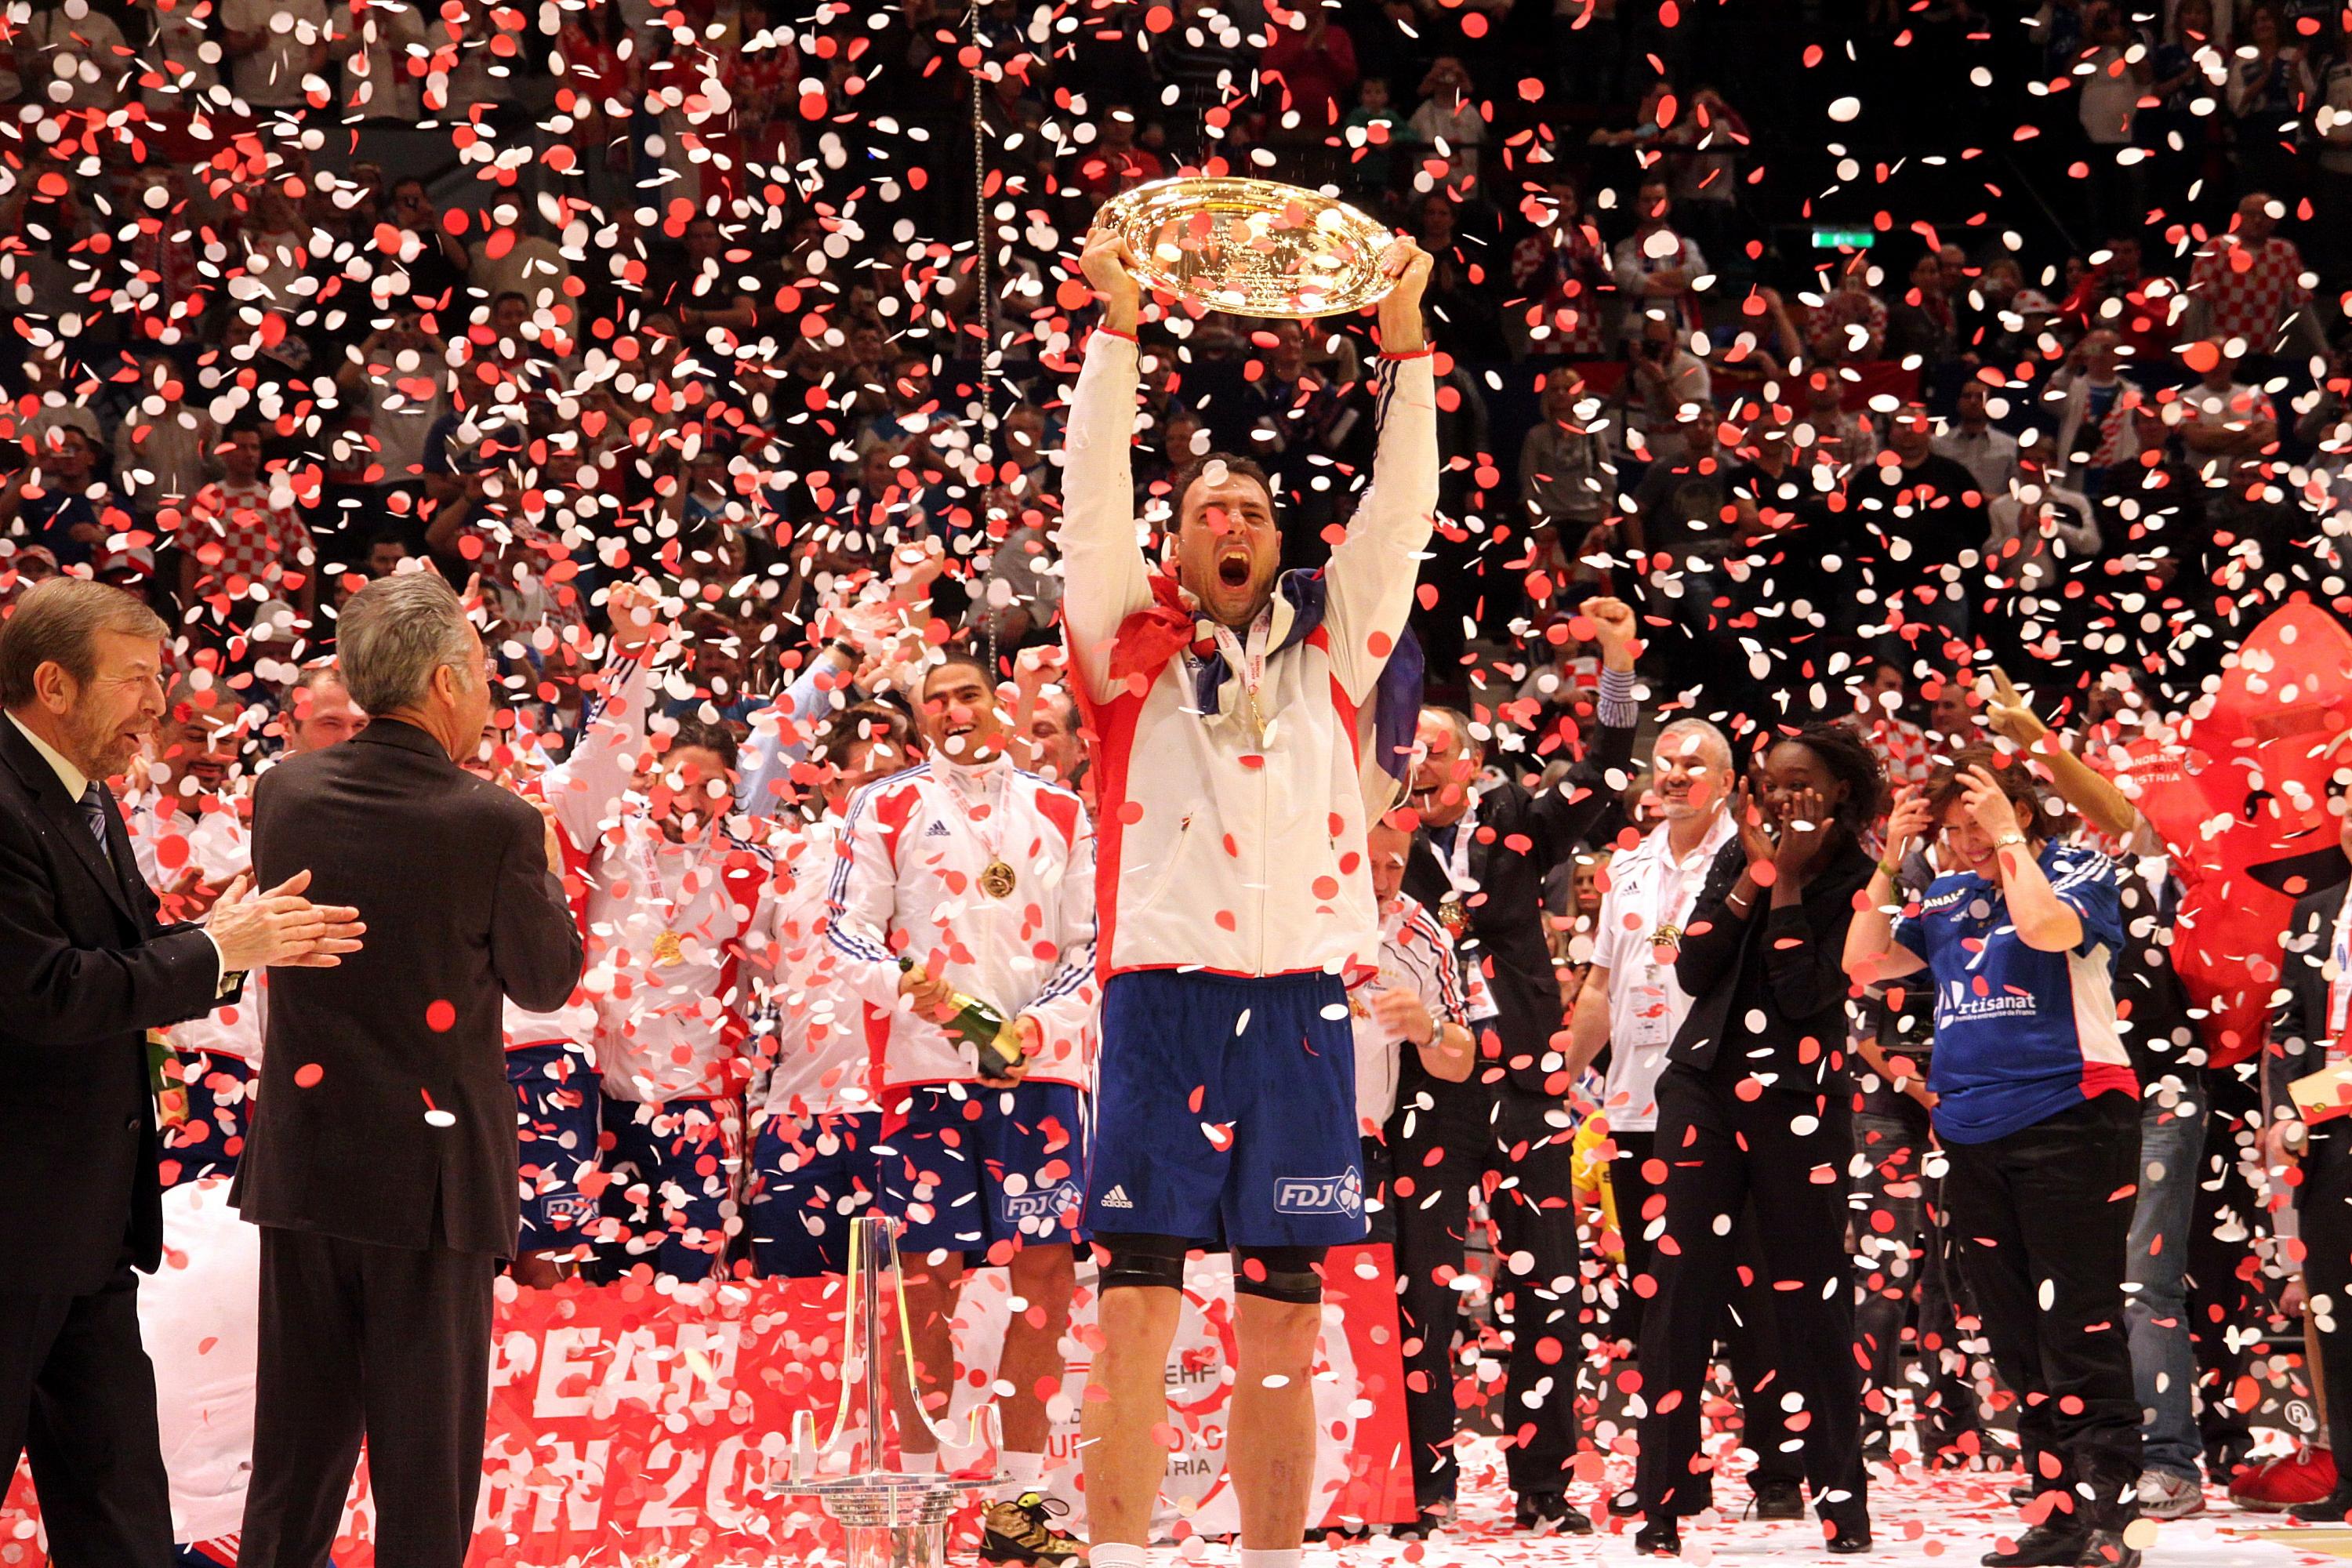 http://upload.wikimedia.org/wikipedia/commons/4/4d/France_is_jubilant_%2806%29_-_2010_European_Men%27s_Handball_Championship.jpg